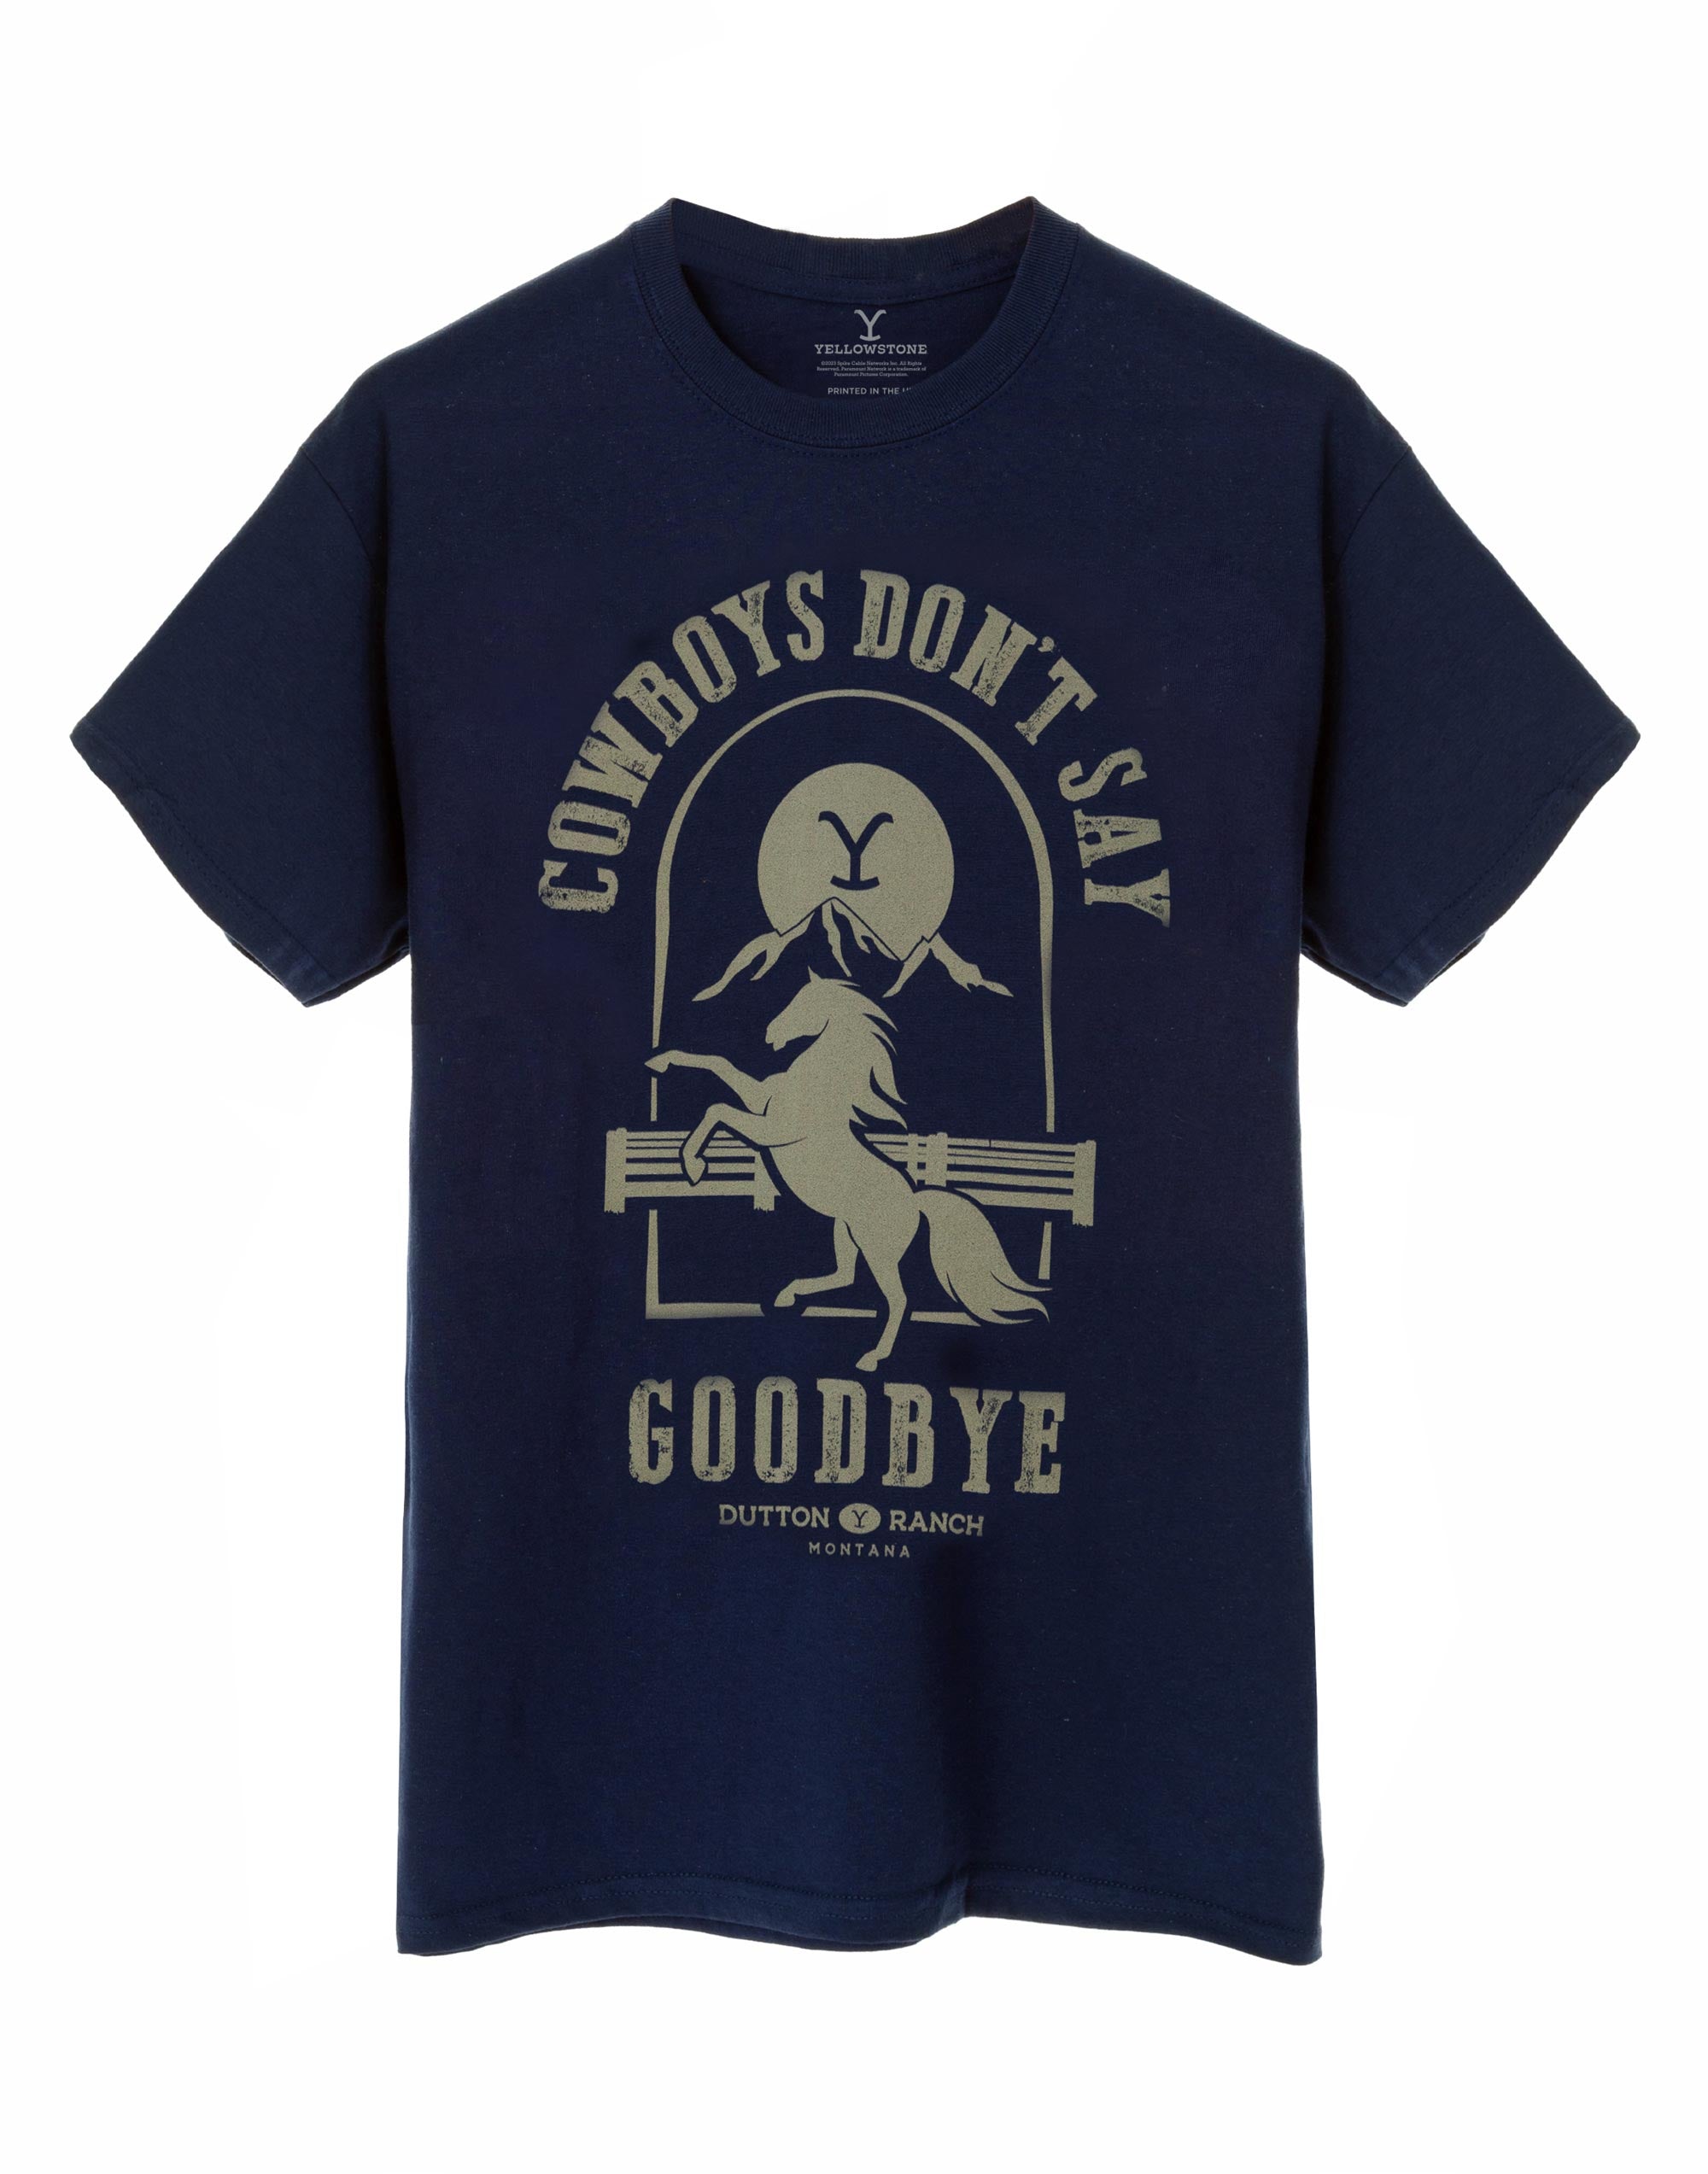 Yellowstone Cowboys Don't Say Goodbye Men's T-Shirt